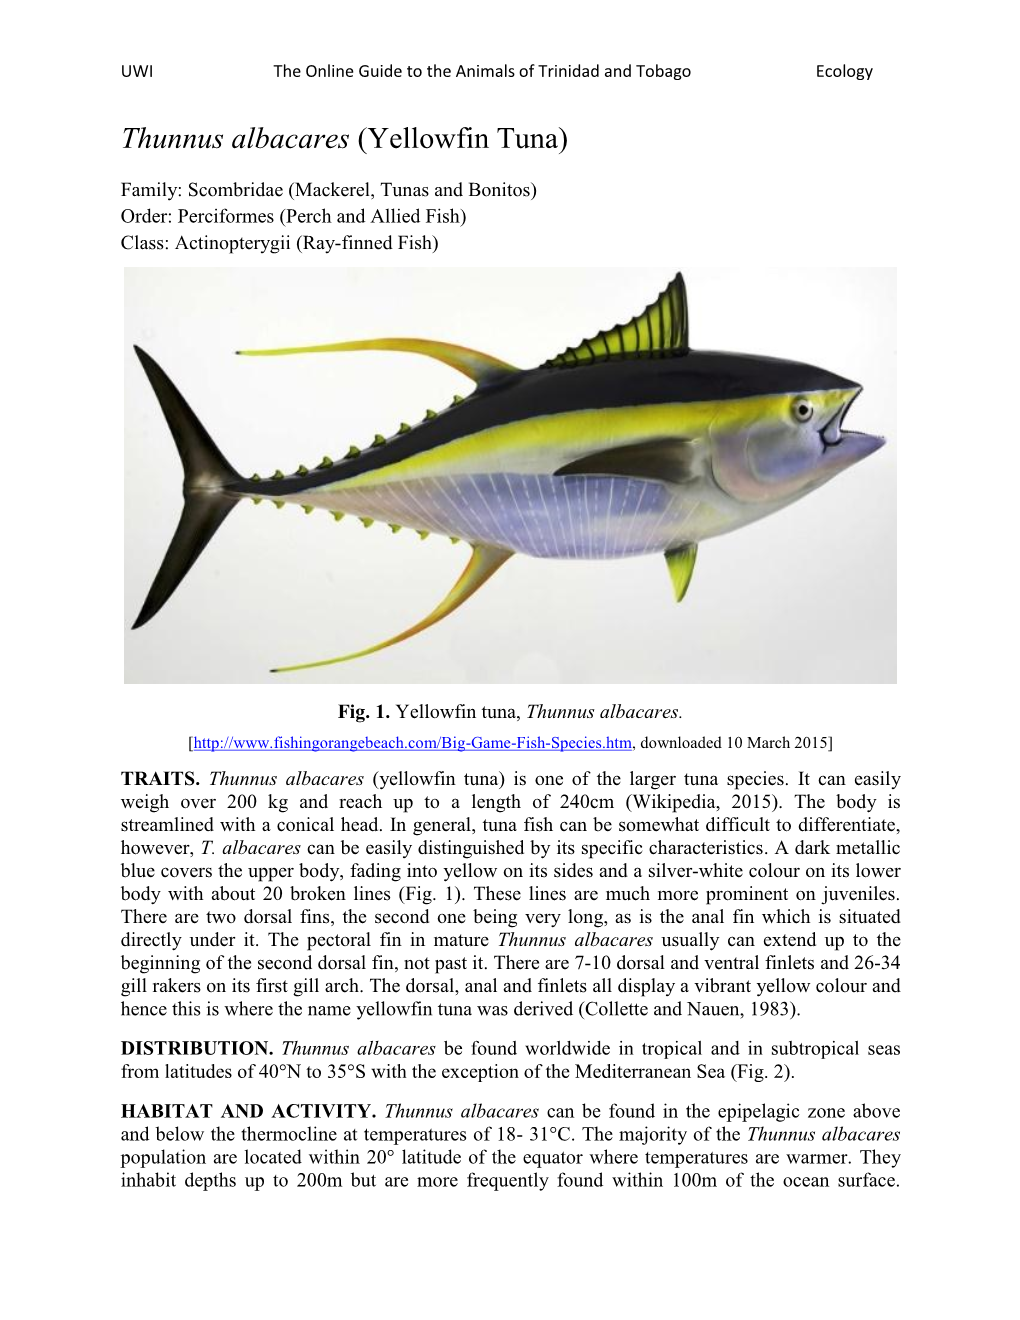 Thunnus Albacares (Yellowfin Tuna)